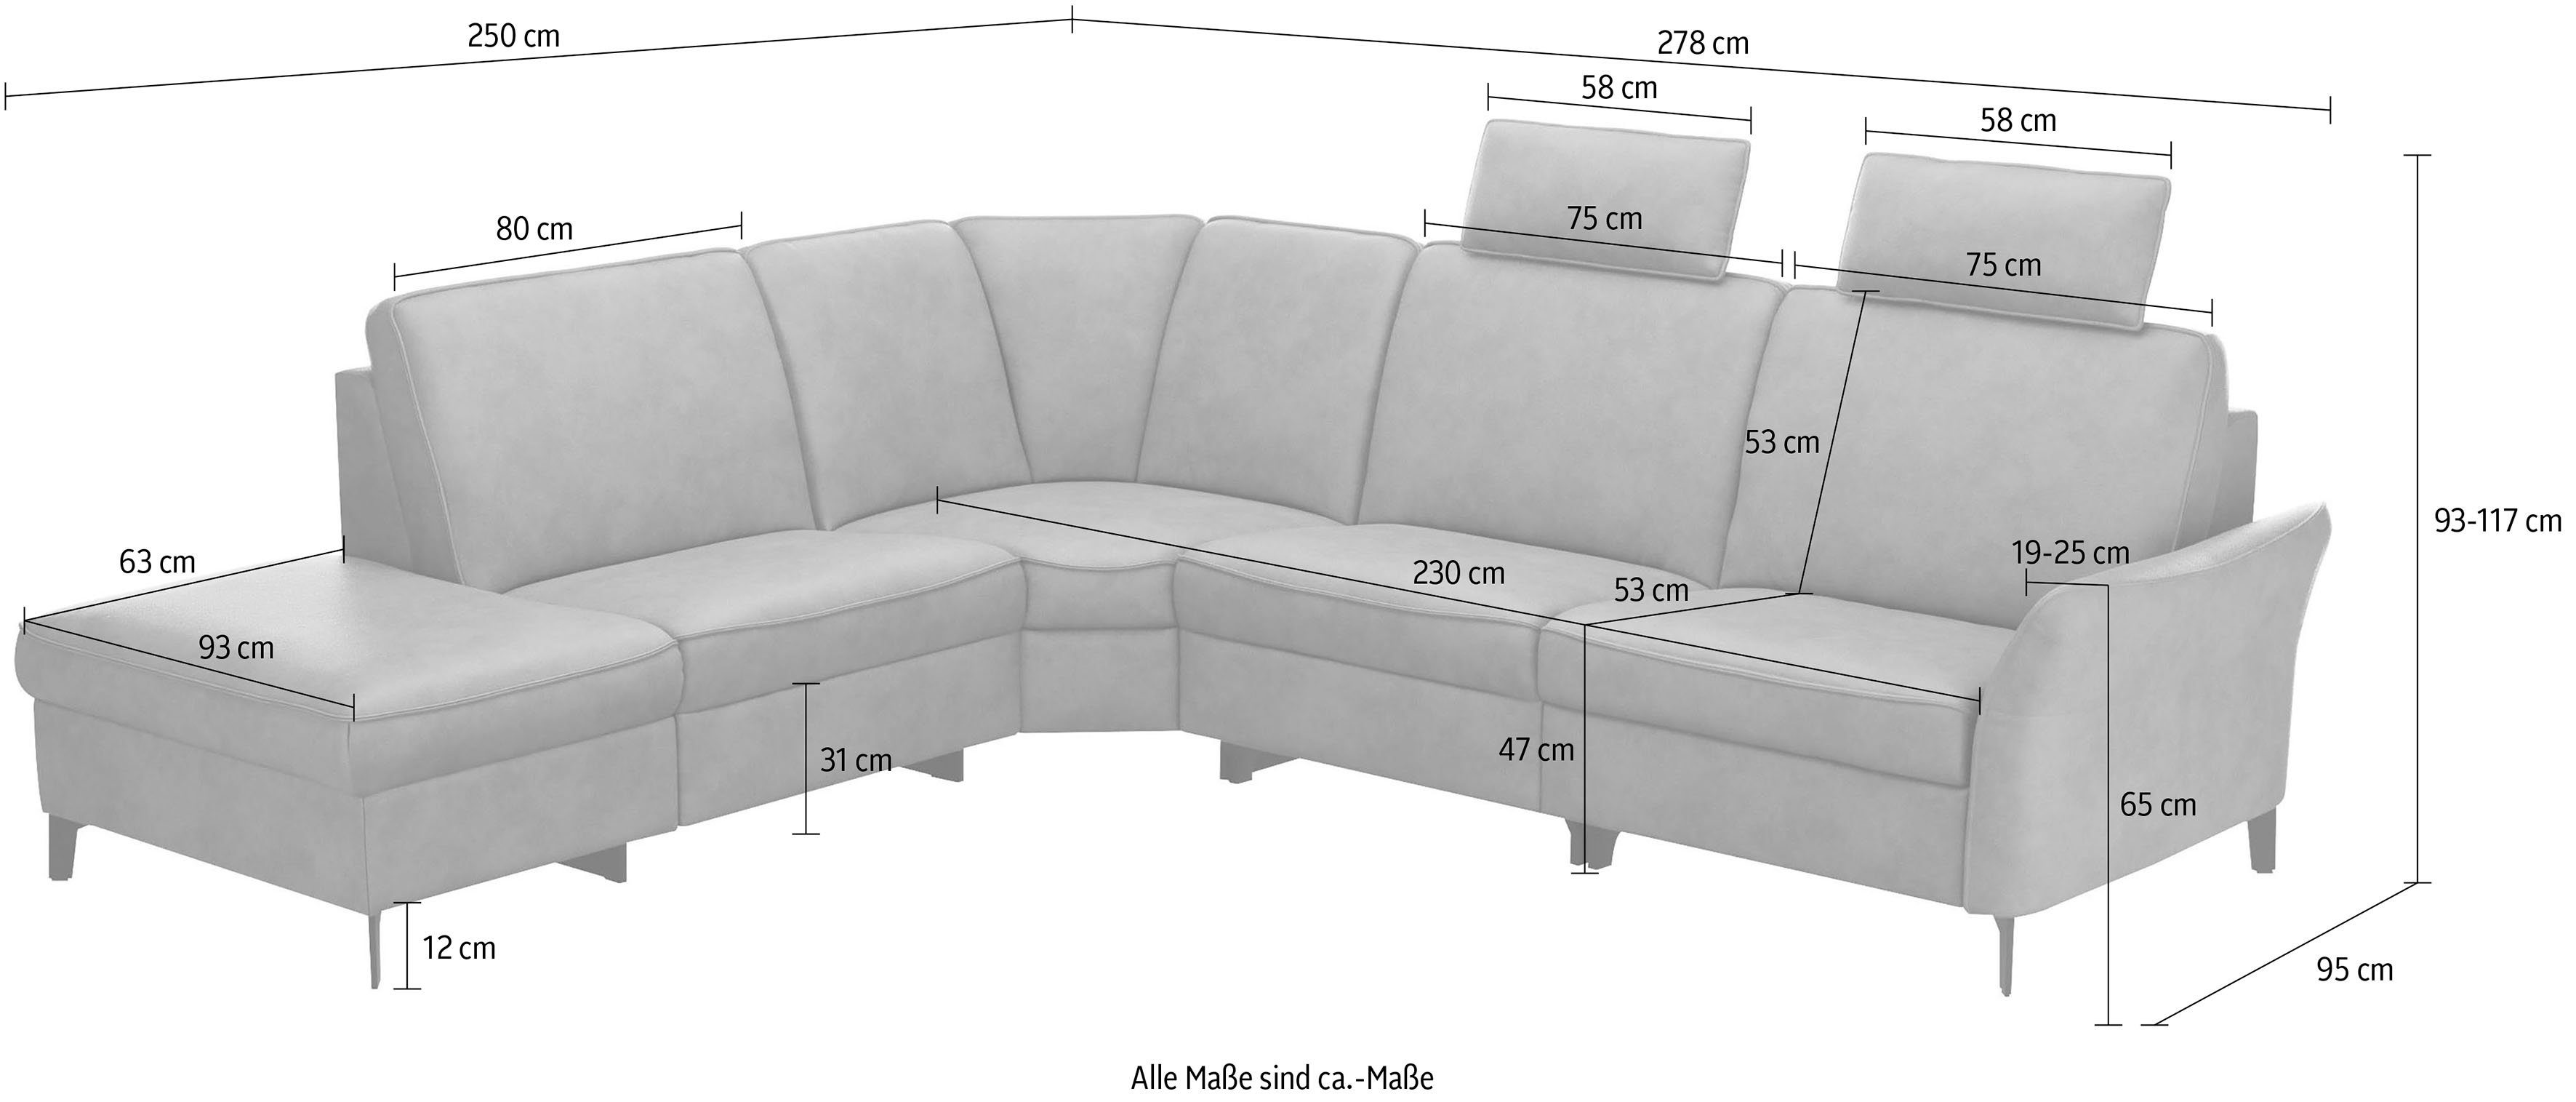 mane oder 1920, links Relaxsitze, integrierte Ecksofa ein oder rechts zwei himolla